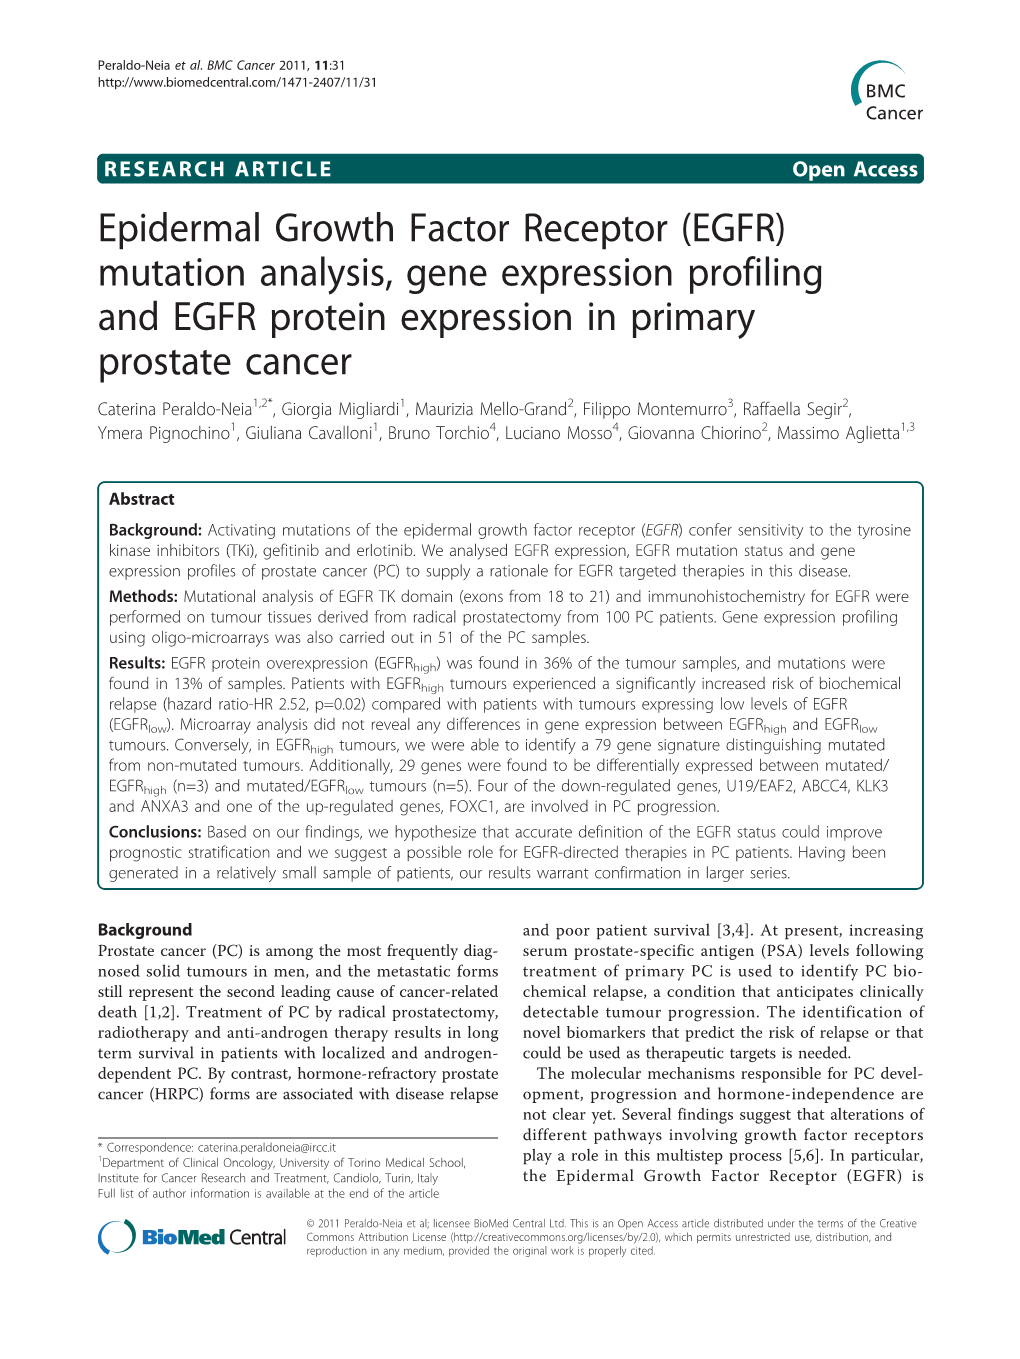 Epidermal Growth Factor Receptor (EGFR) Mutation Analysis, Gene